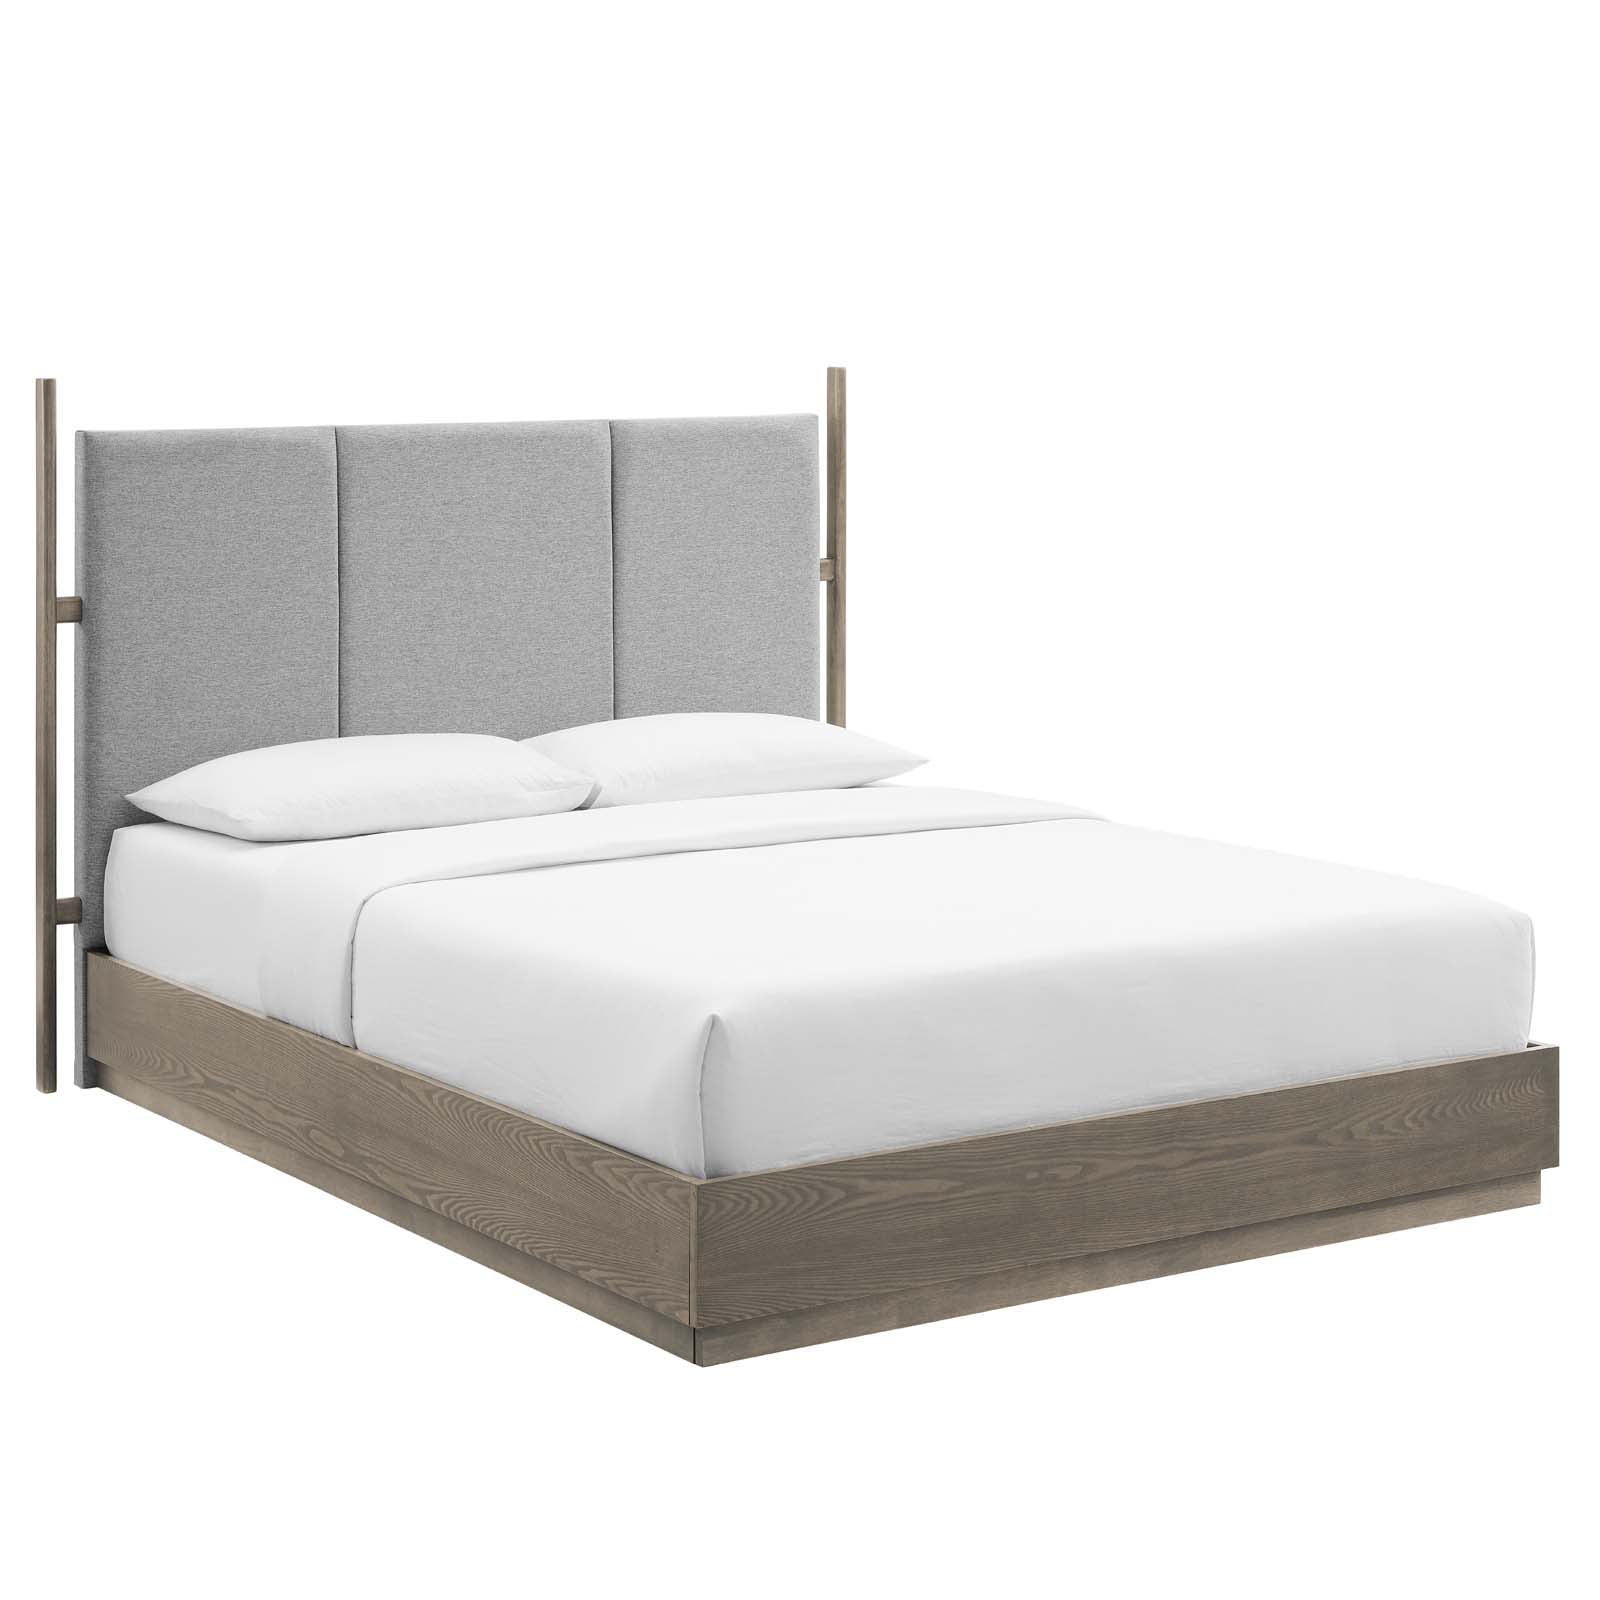 Merritt 5 Piece Upholstered Bedroom Set